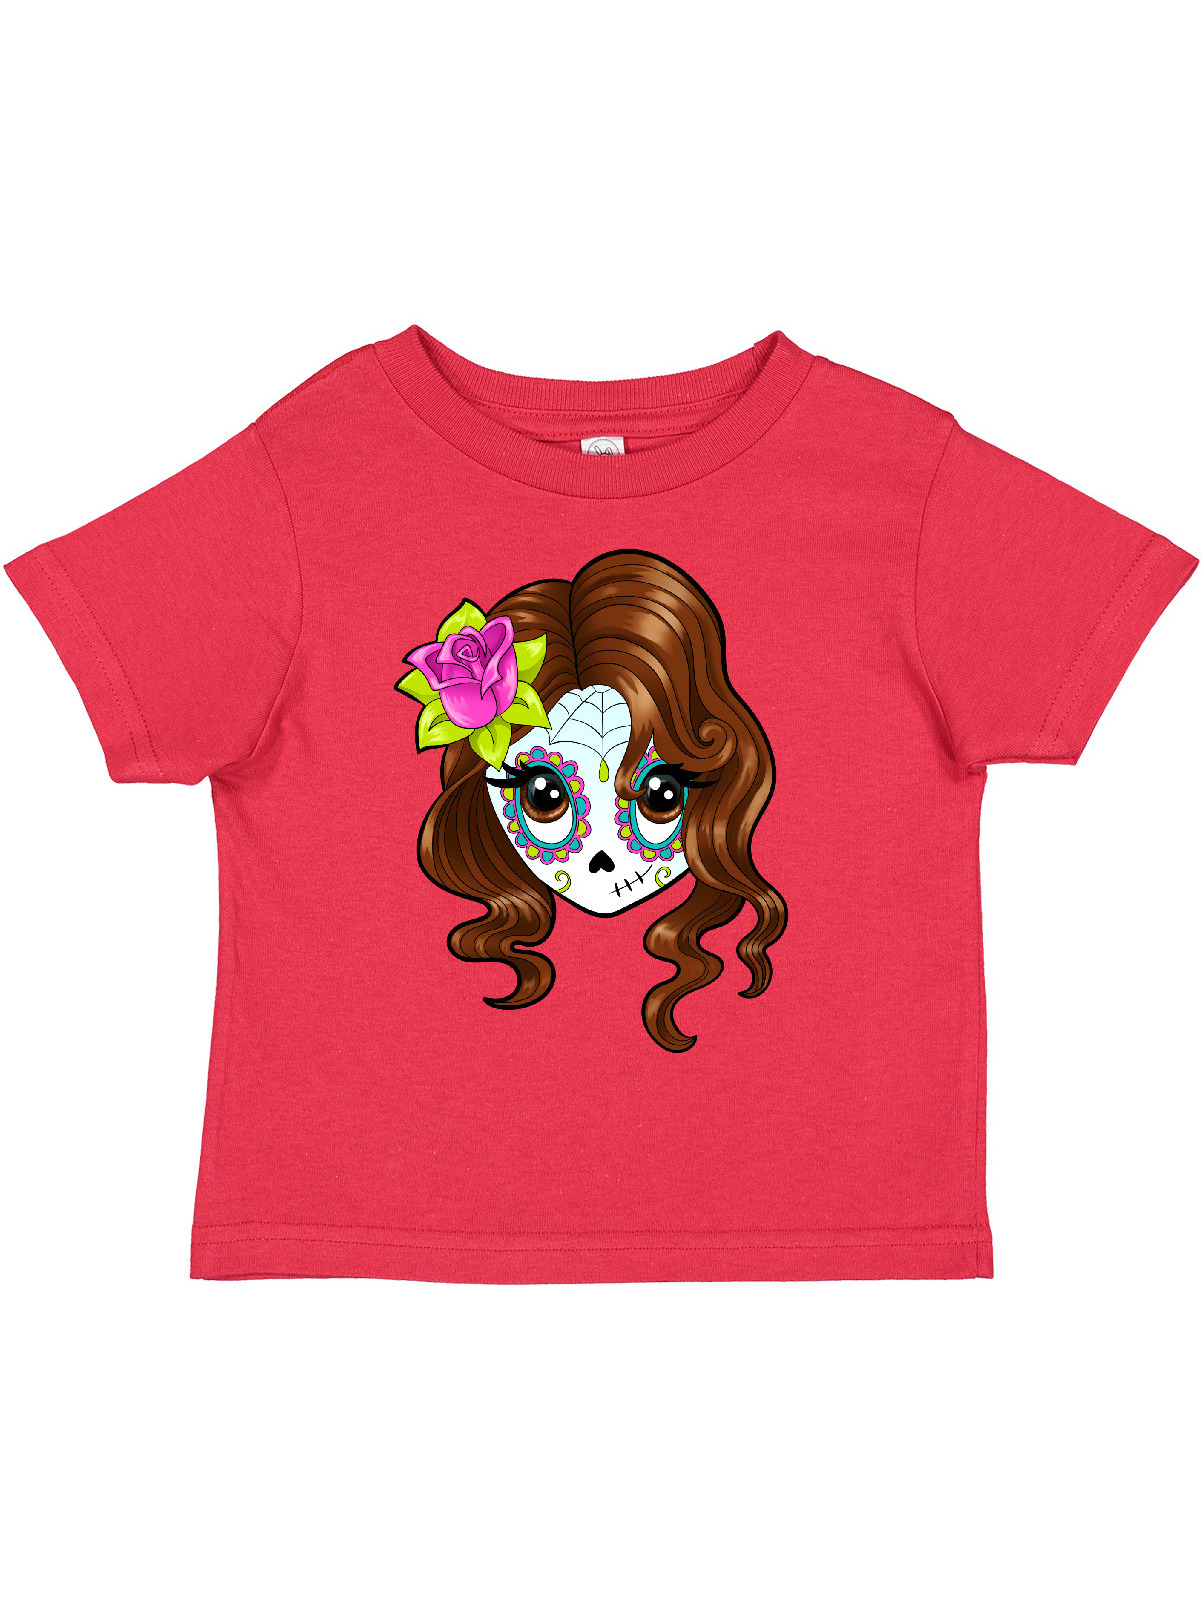 Inktastic Cute Sugar Skull Girl Boys or Girls Toddler T-Shirt - image 1 of 4